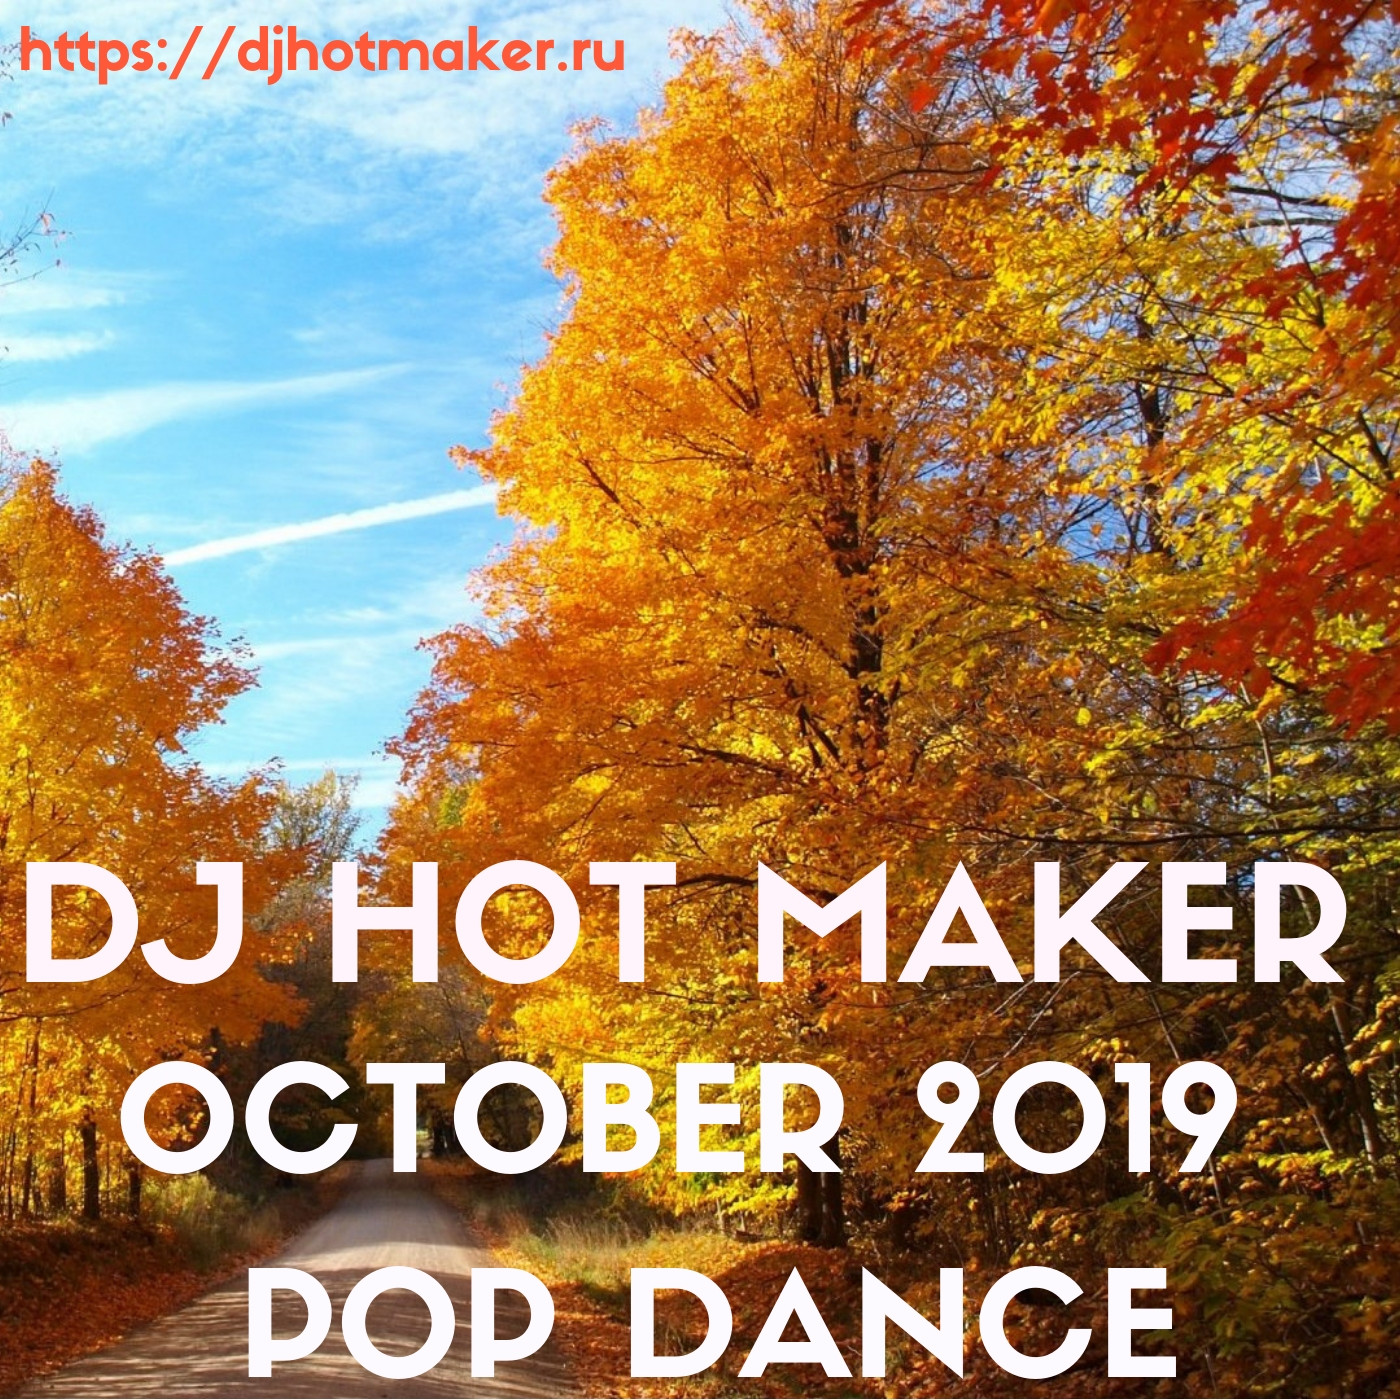 DJ Hot Maker - October 2019 Pop Dance Promo